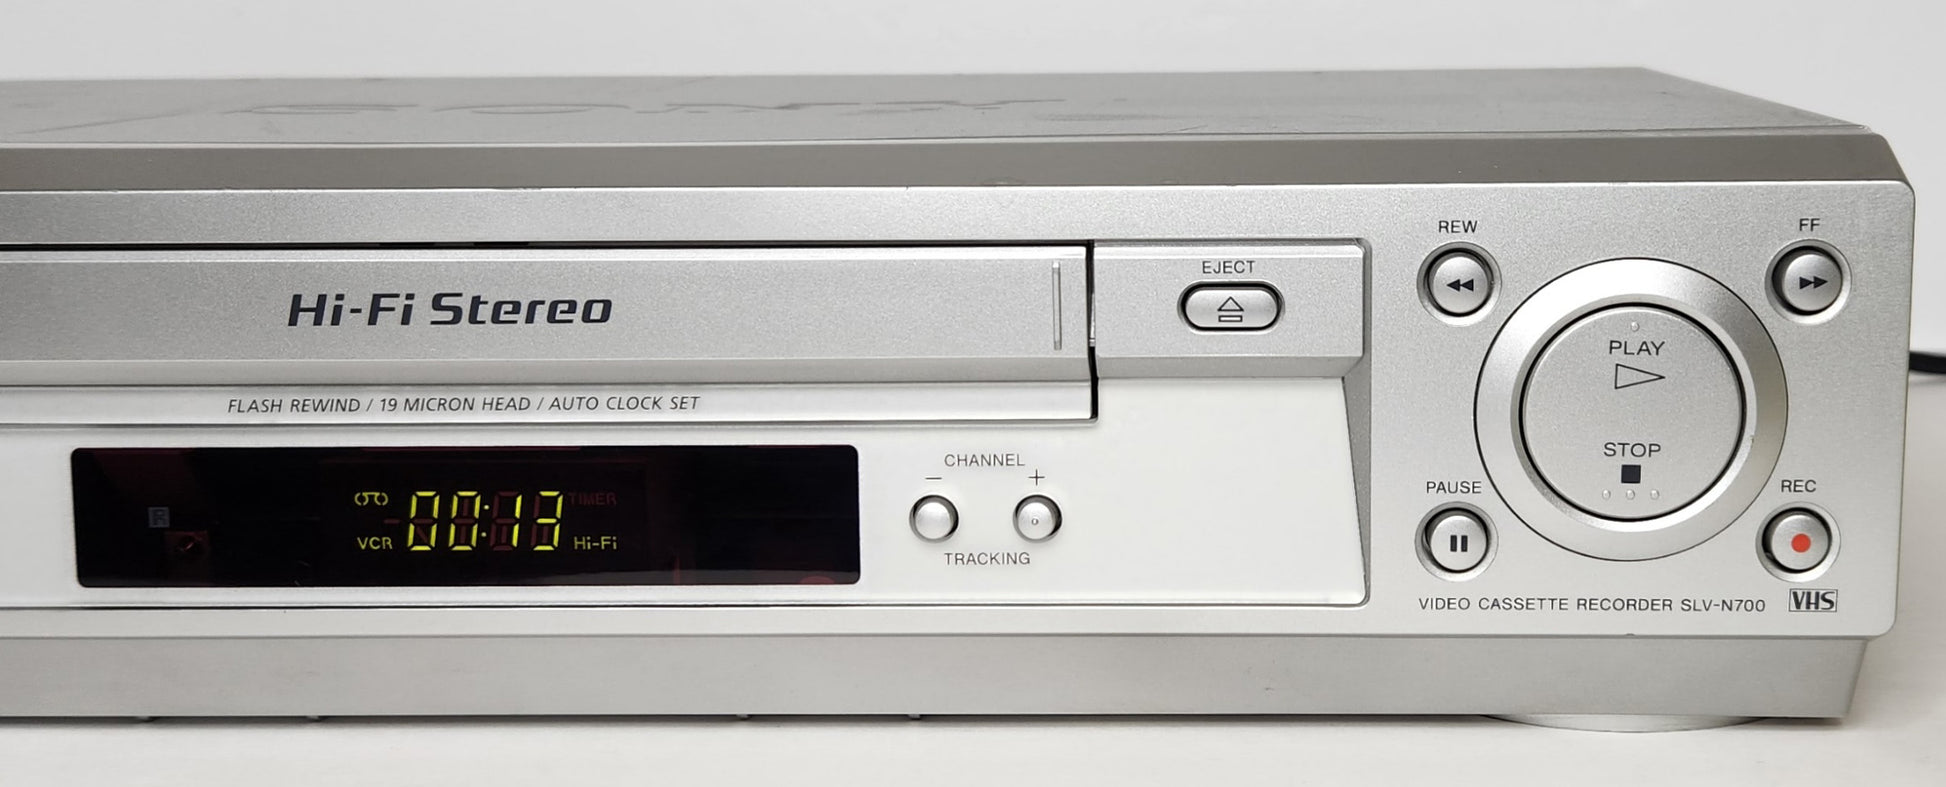 Sony SLV-N700 VCR, 4-Head Hi-Fi Stereo - Right